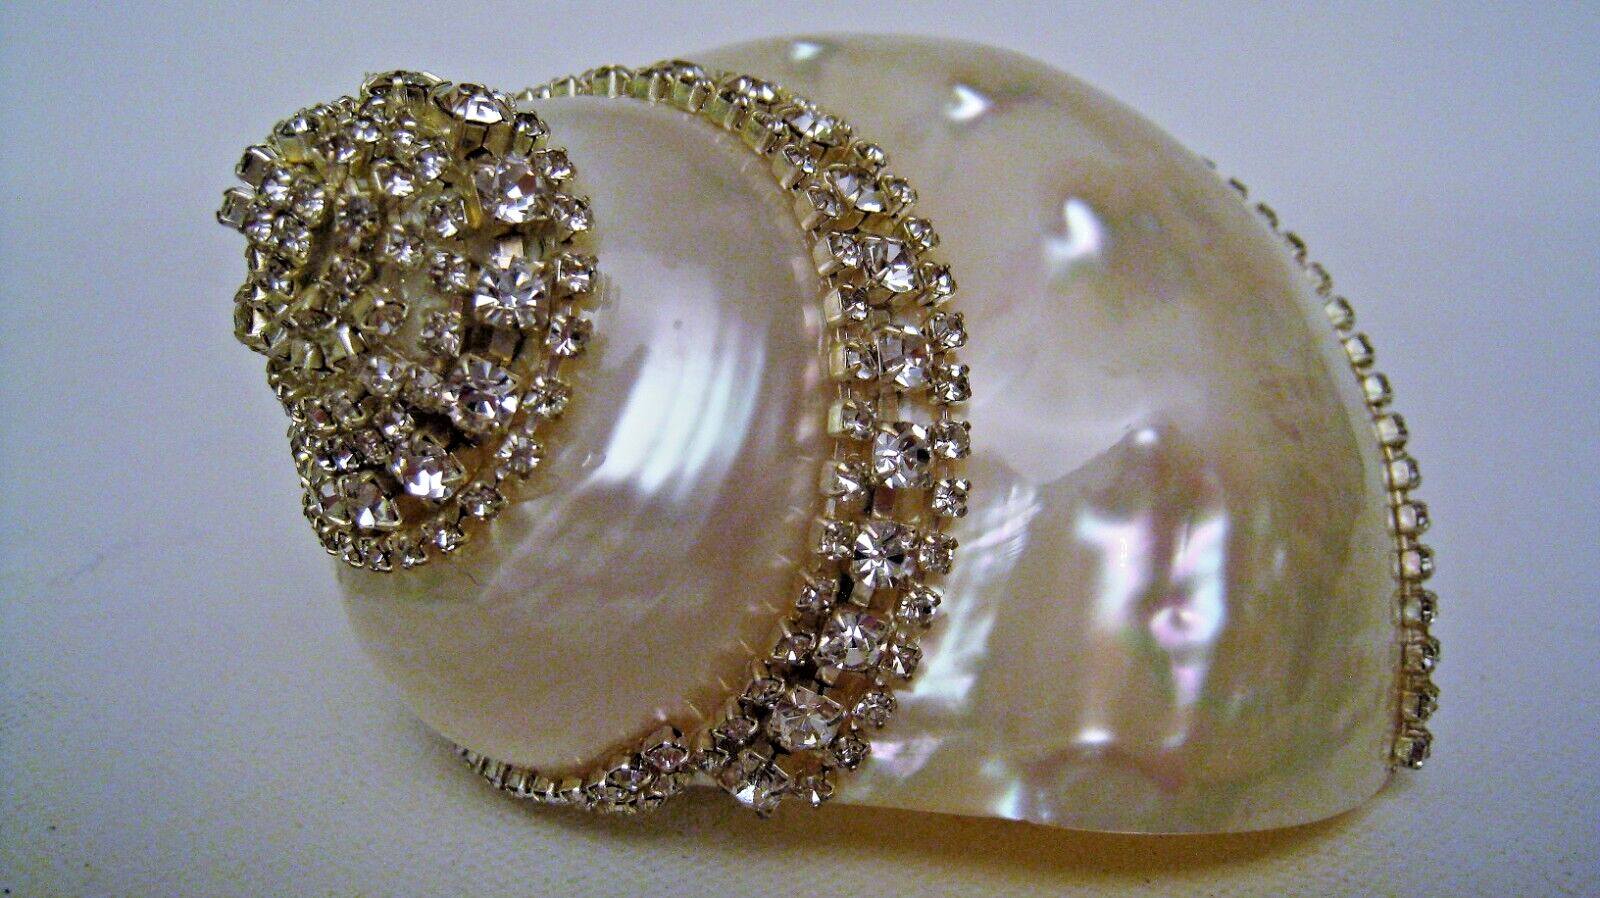 Cristina Ferrare Swarovski Bejeweled Large Seashell Mother of Pearl New Vintage